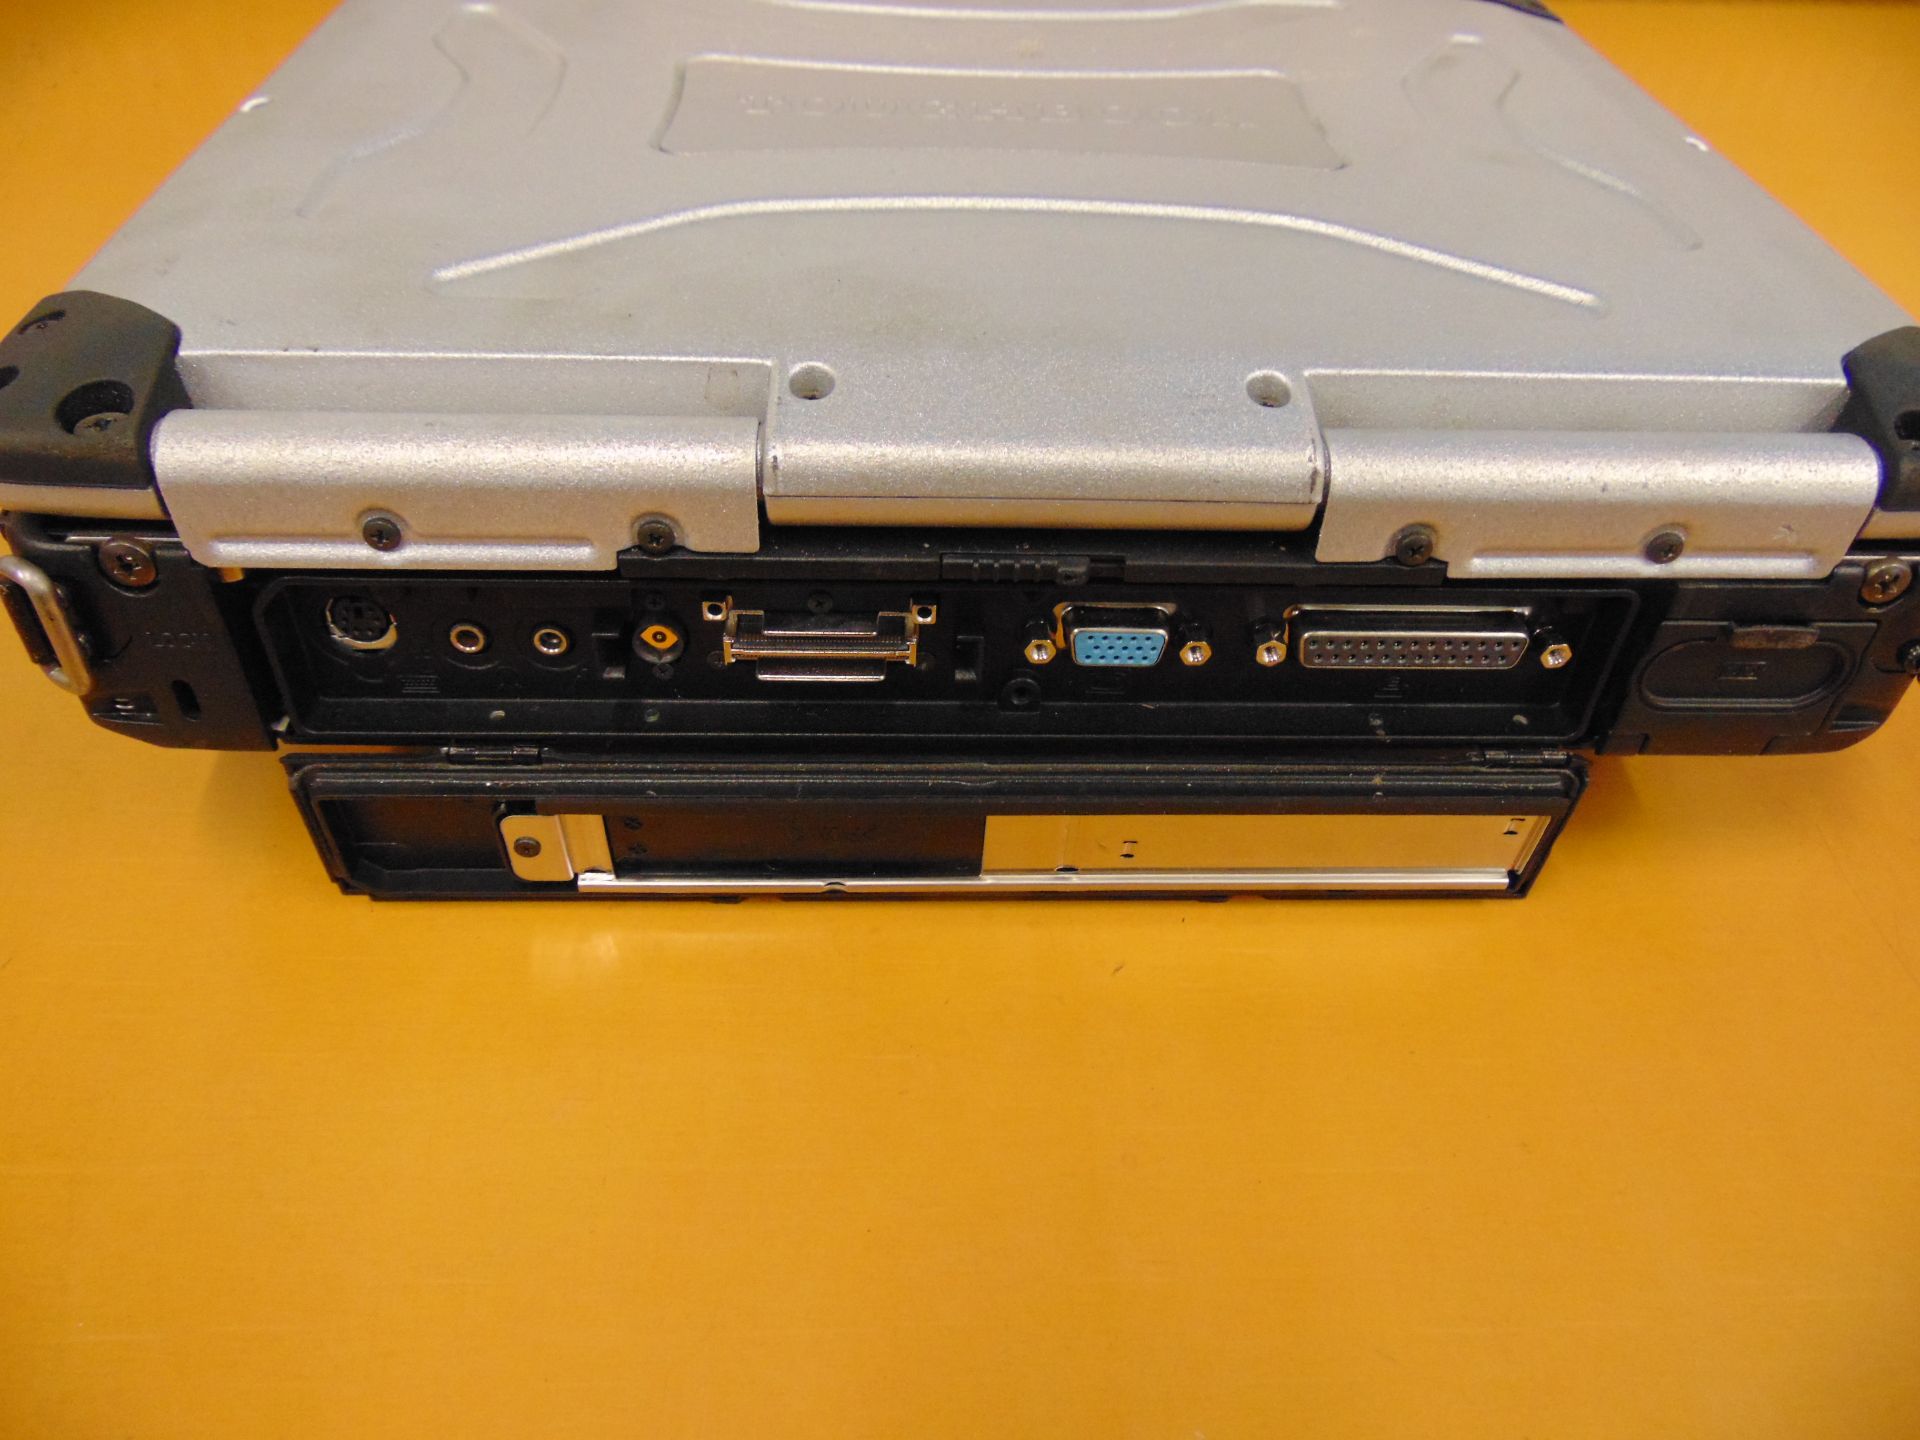 Panasonic CF-29 Toughbook Laptop - Image 7 of 8